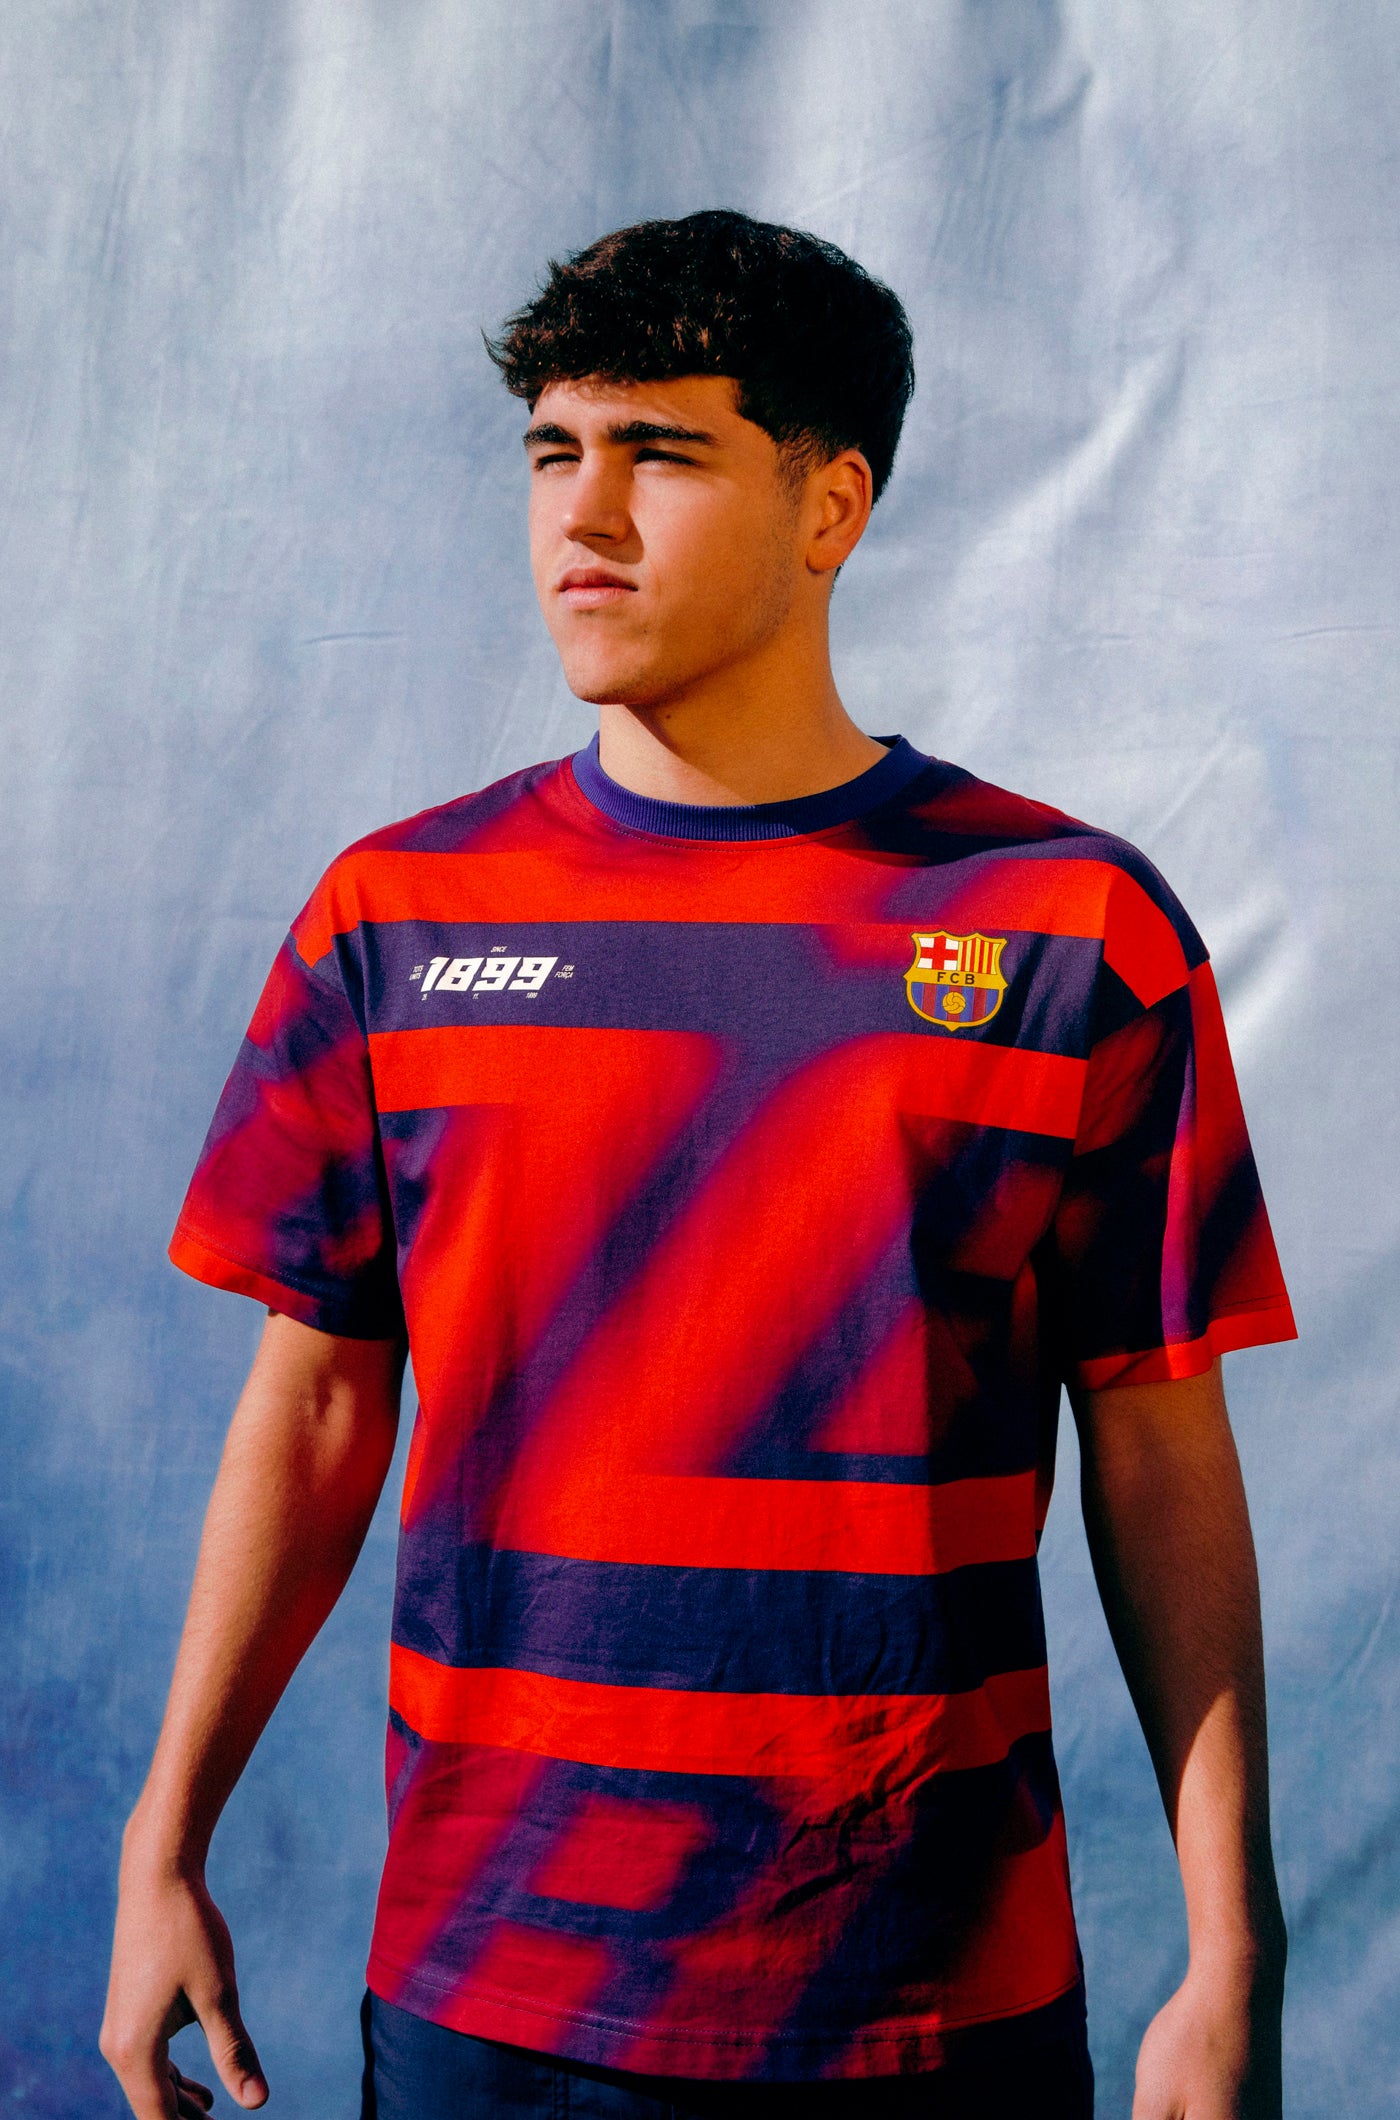 Kurzarm-T-Shirt mit Barça-Aufdruck